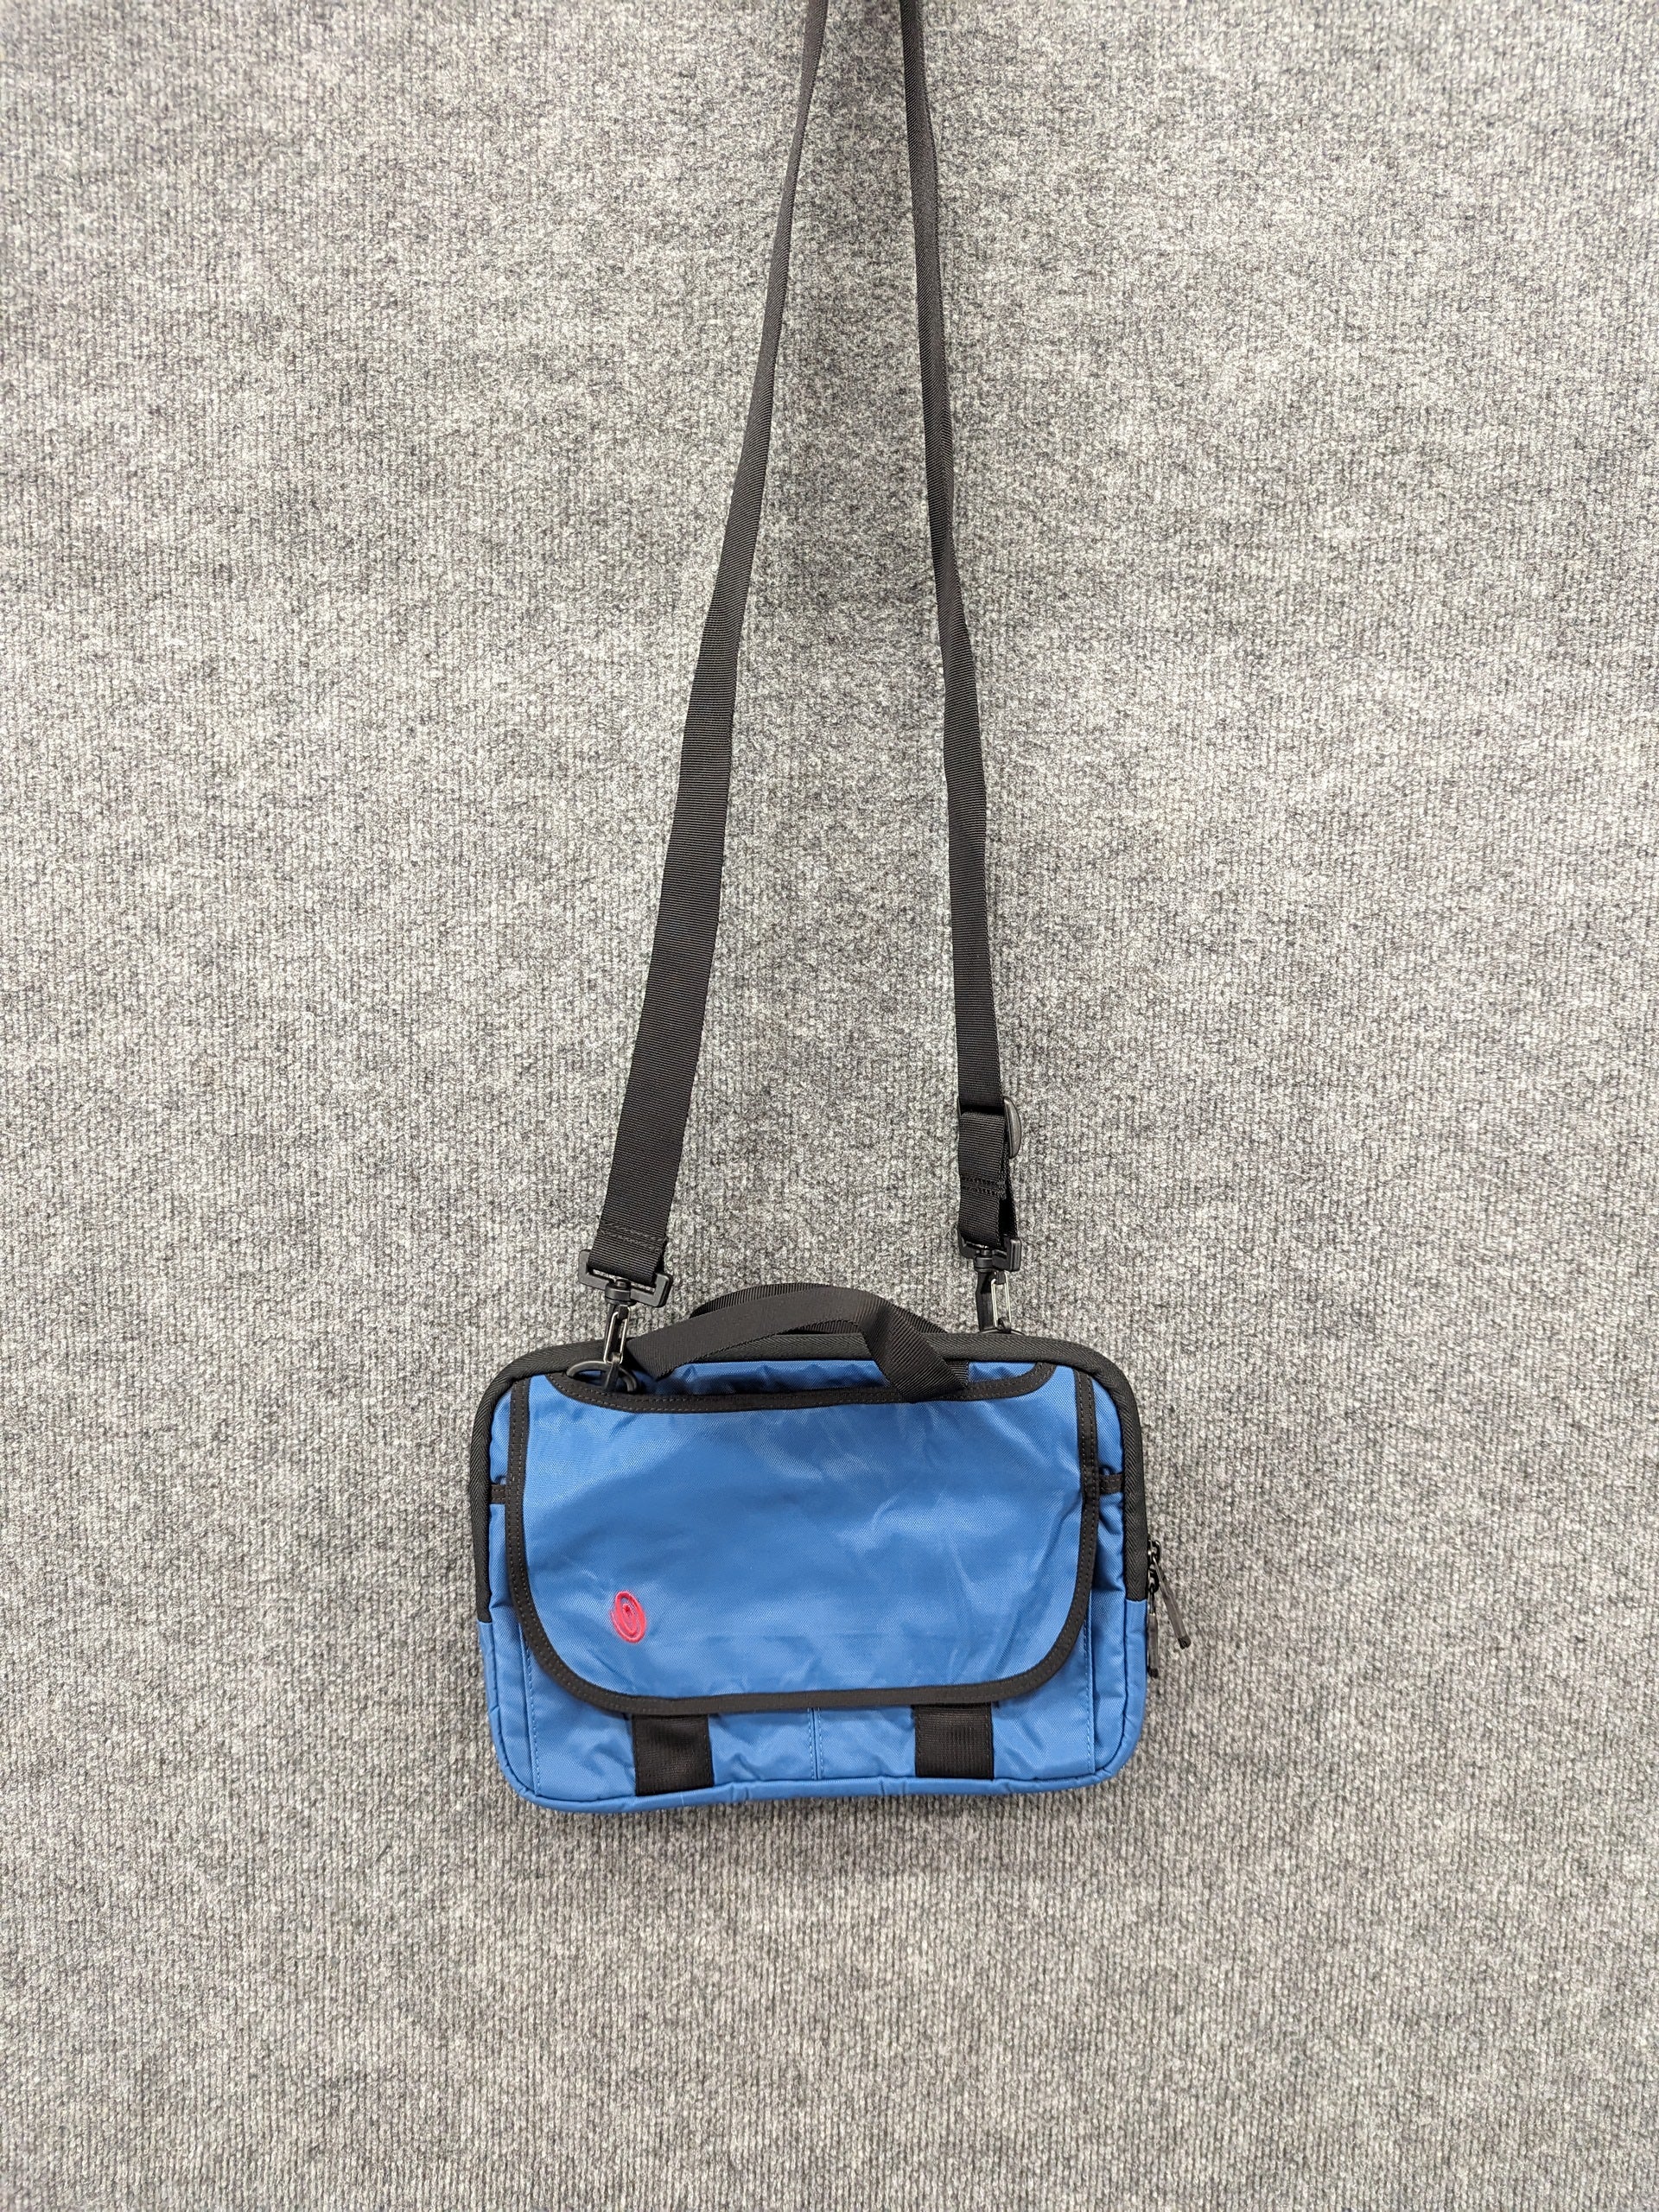 TimBuk2 Messenger Bag – Rambleraven Gear Trader